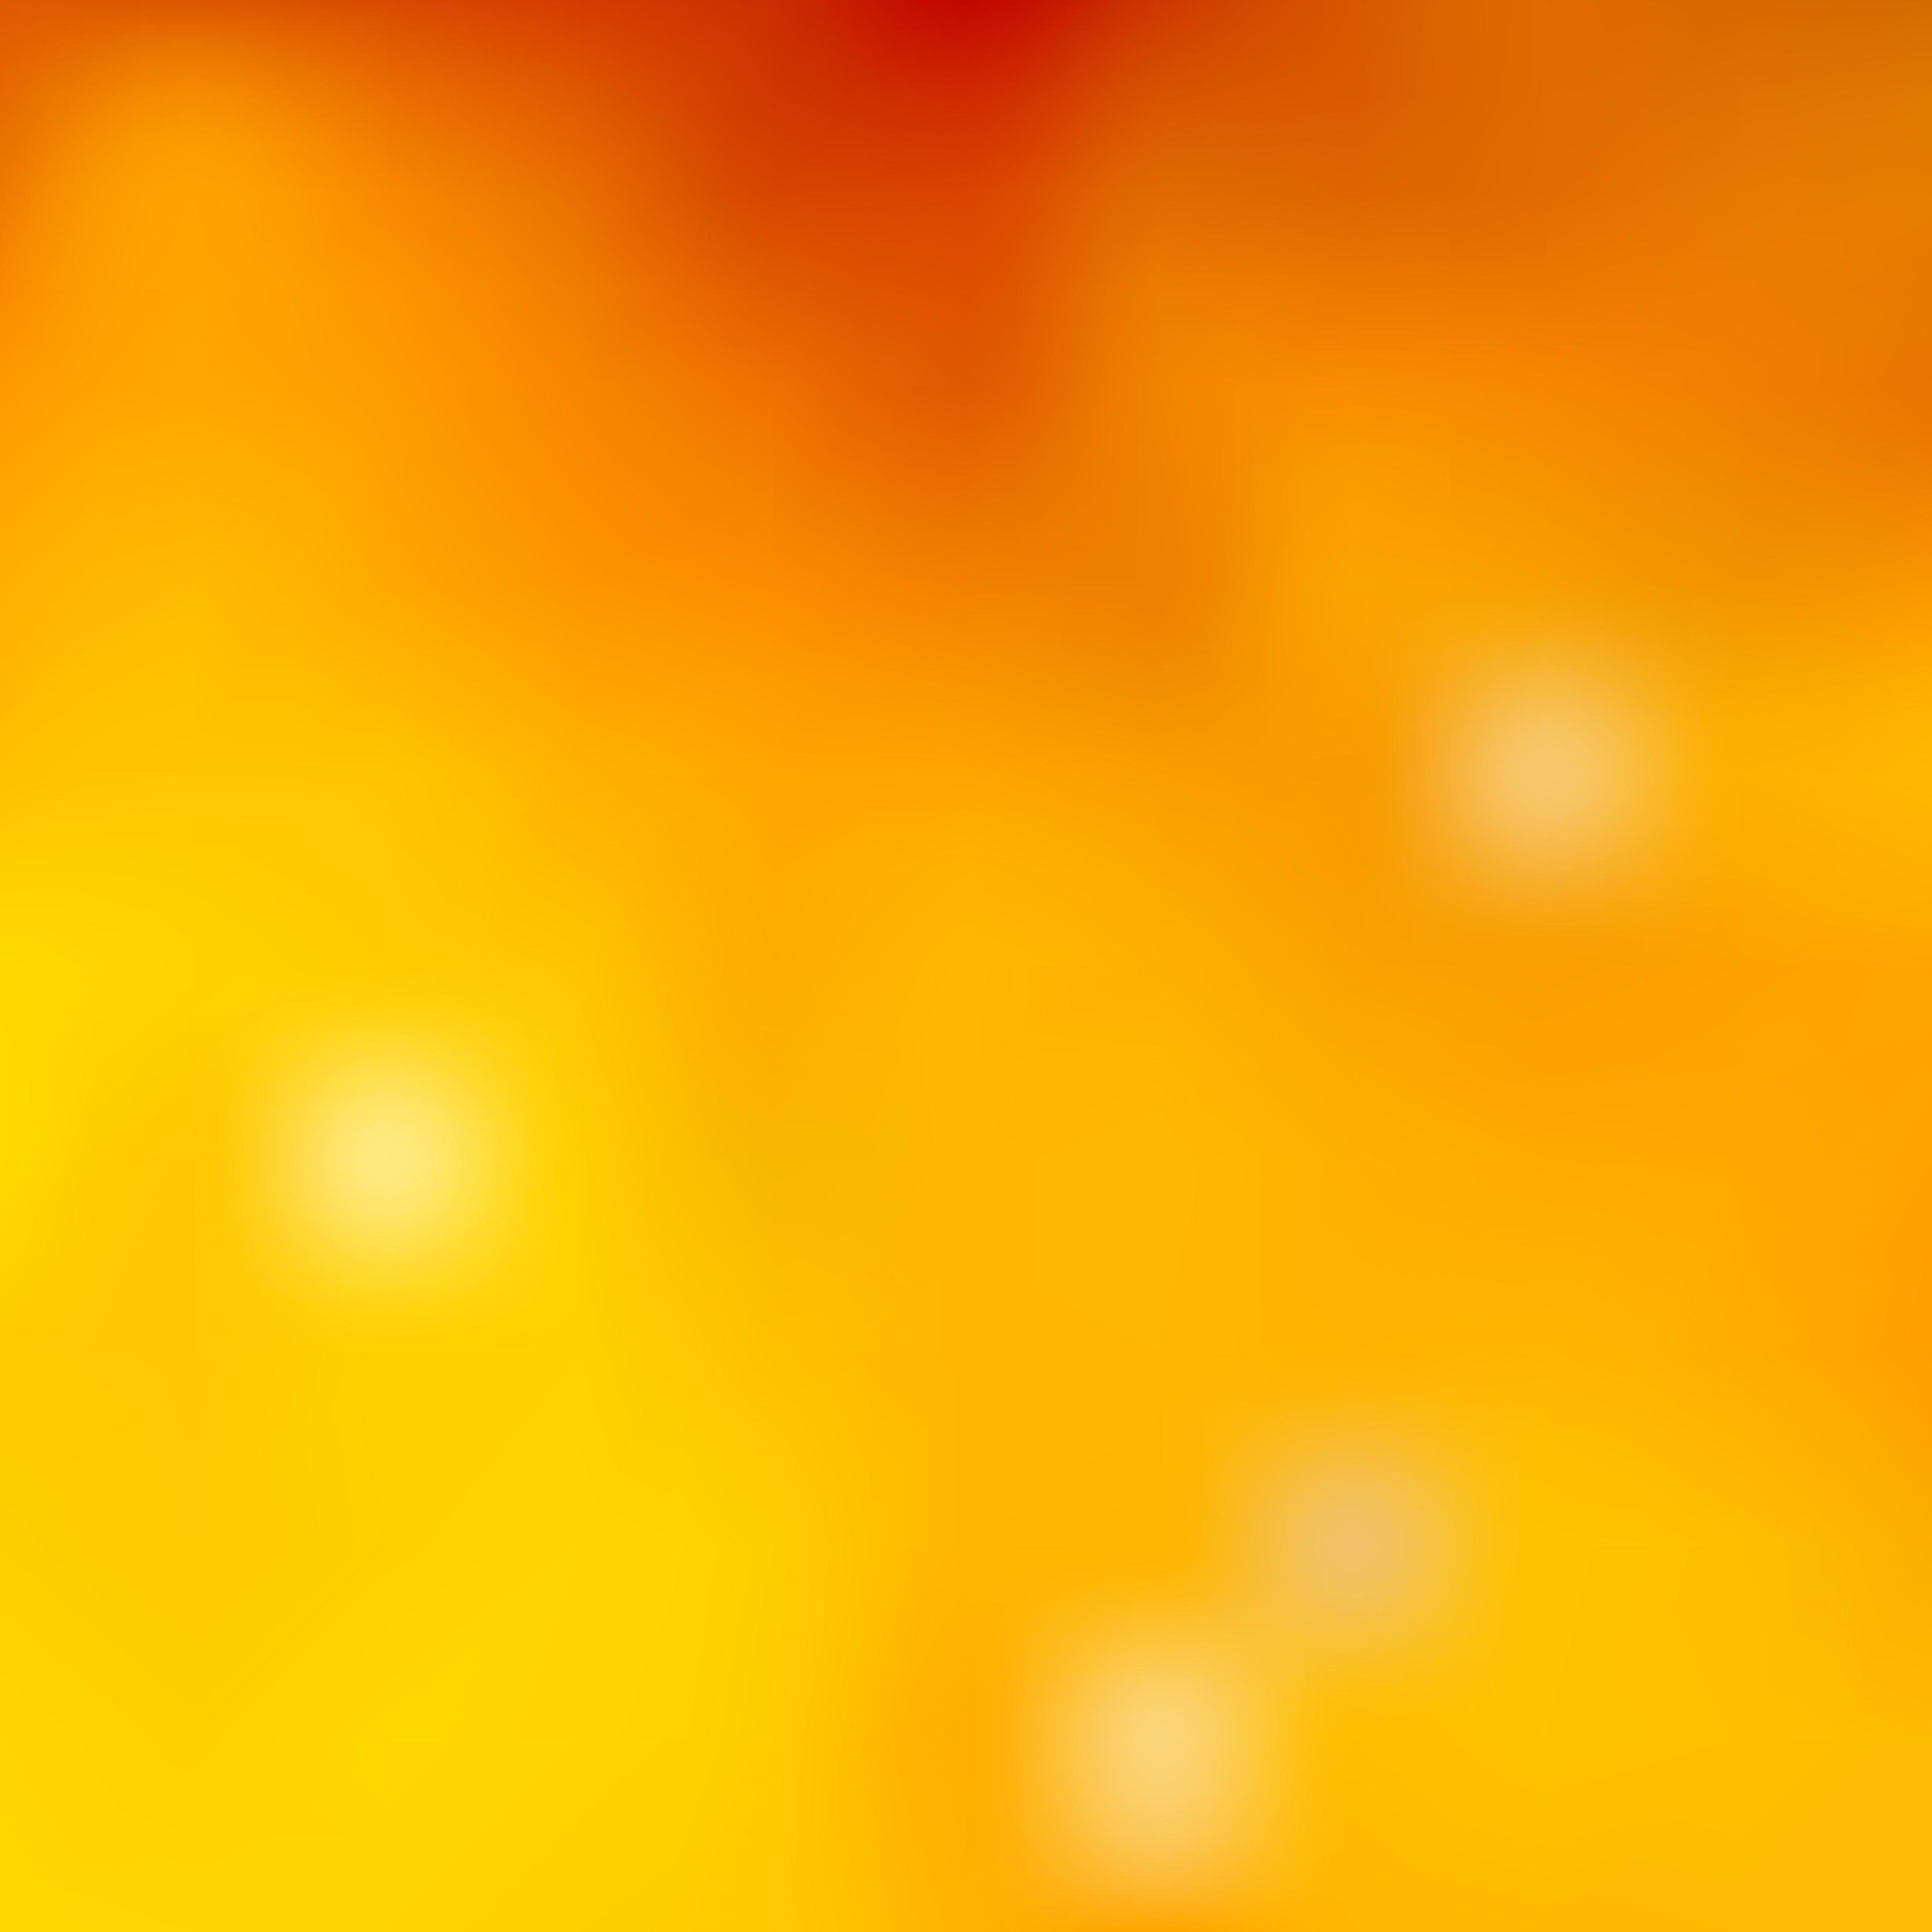 Blurred Amber Orange Color BackgroundFreevectors